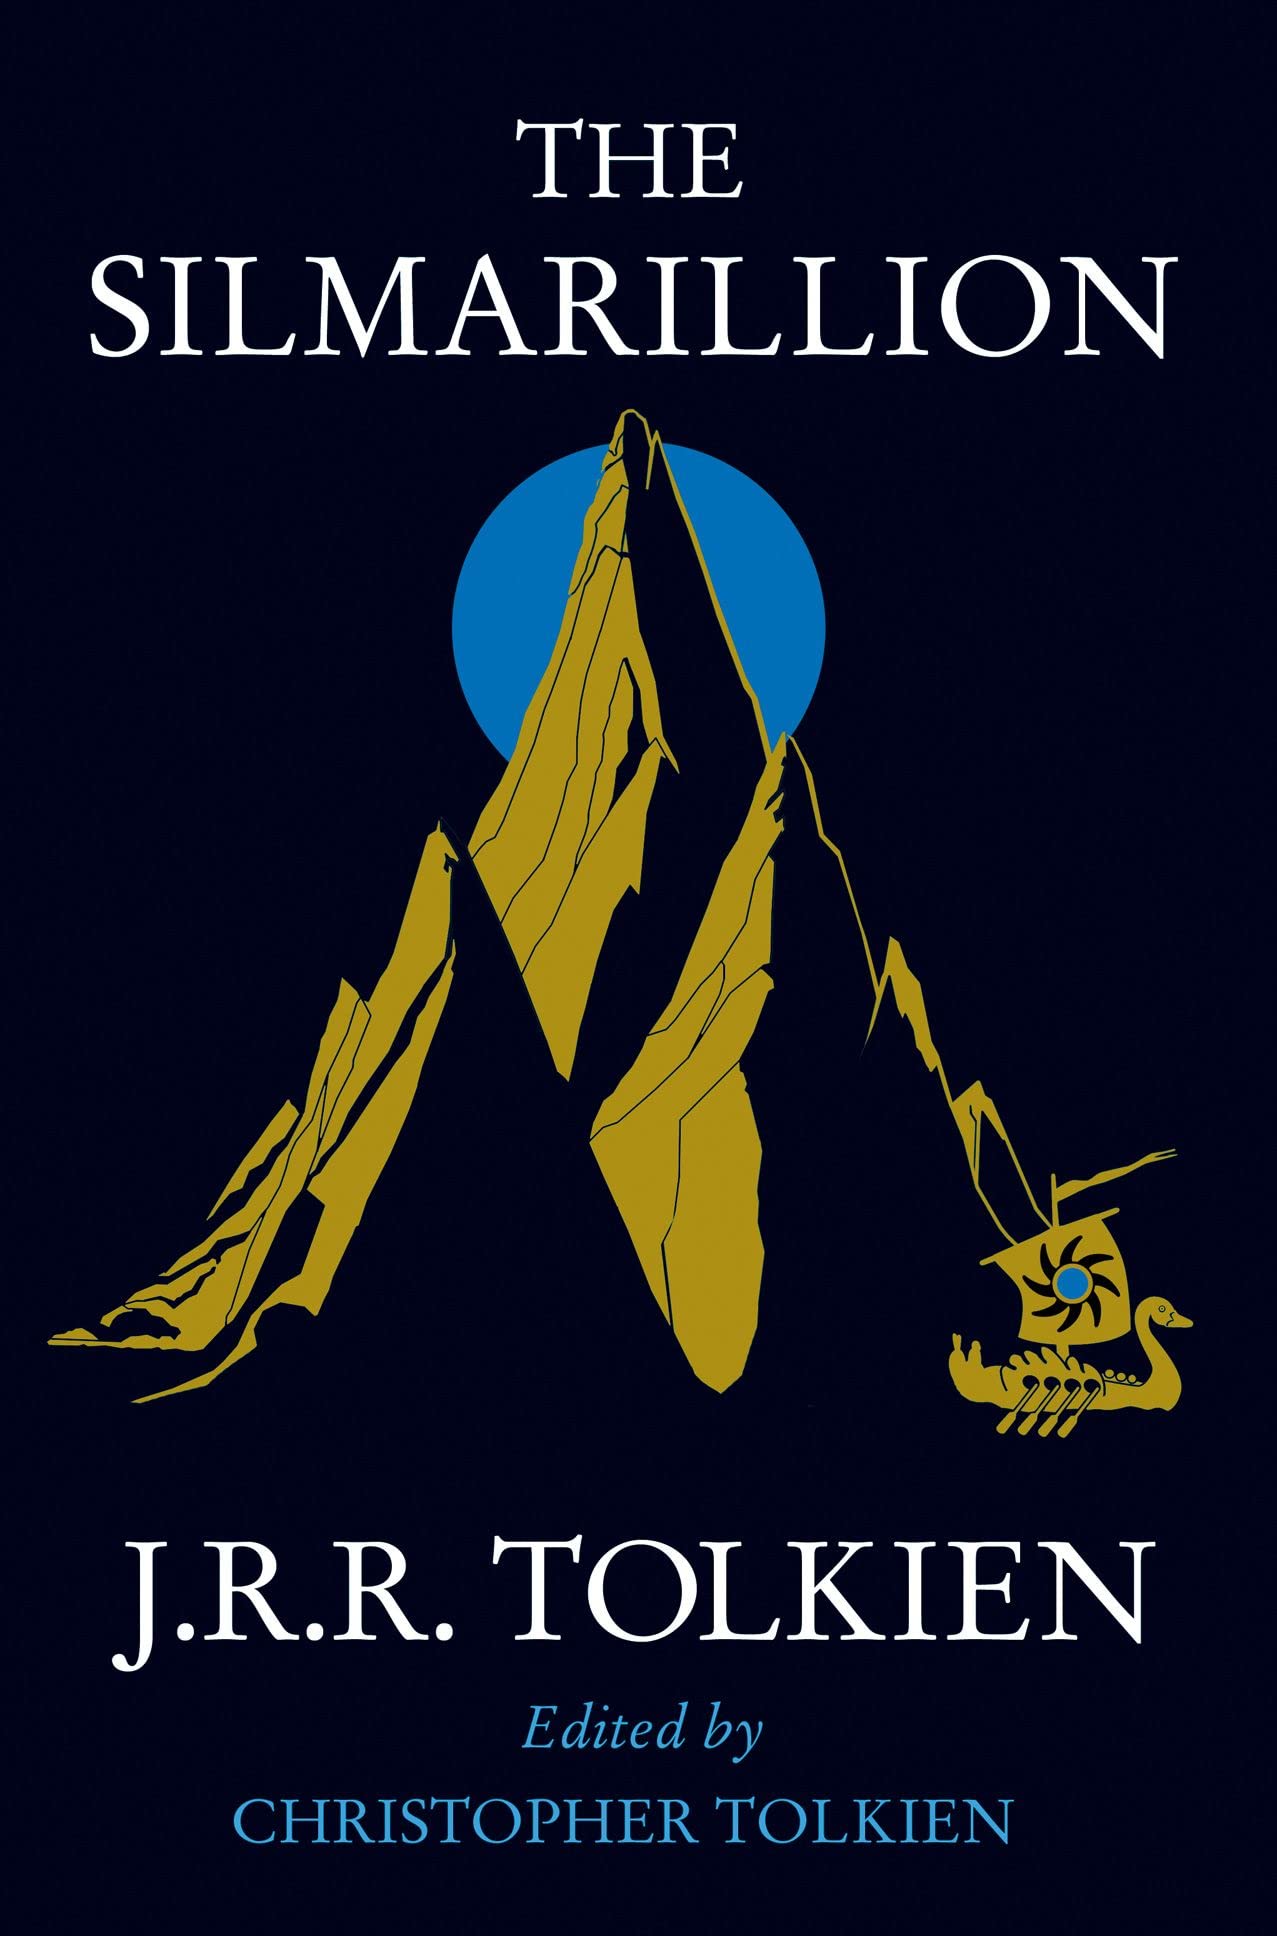 The Silmarillion by J.R.R. Tolkien | Goodreads